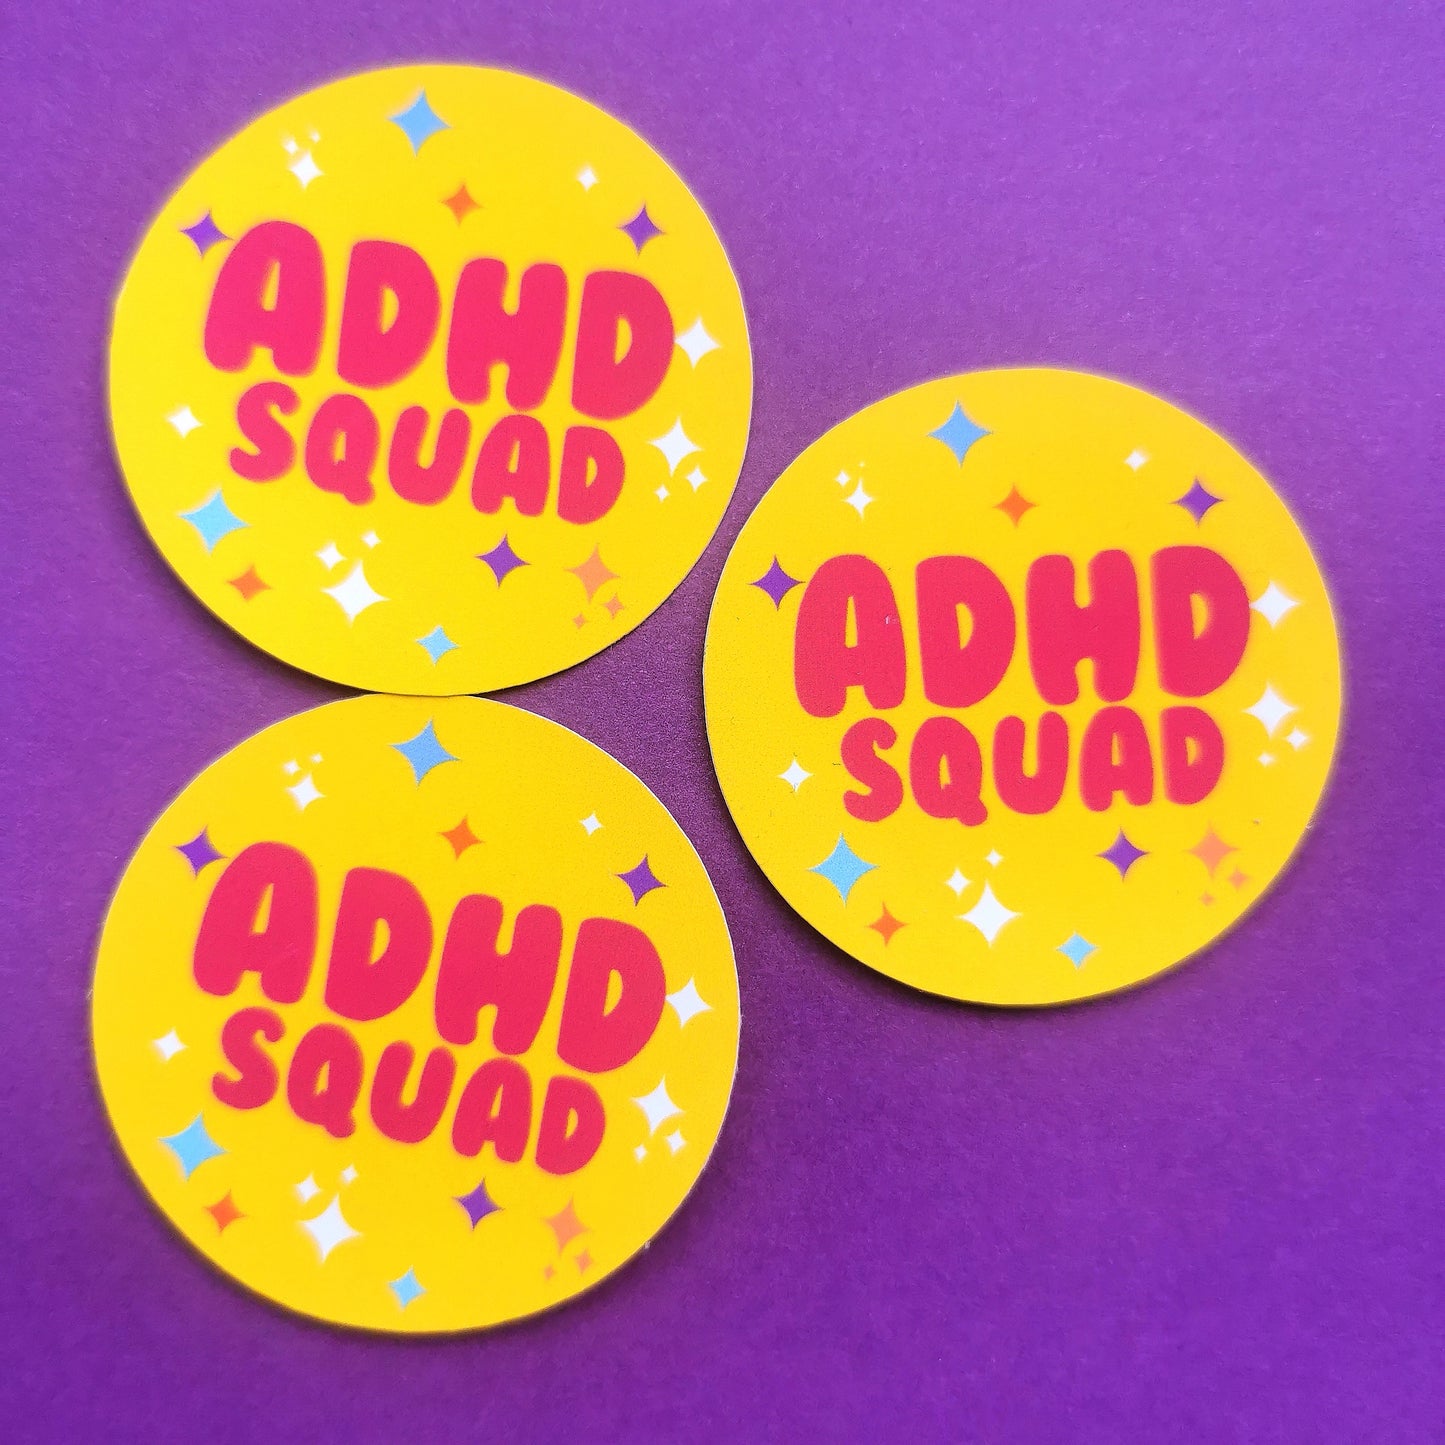 ADHD squad sticker